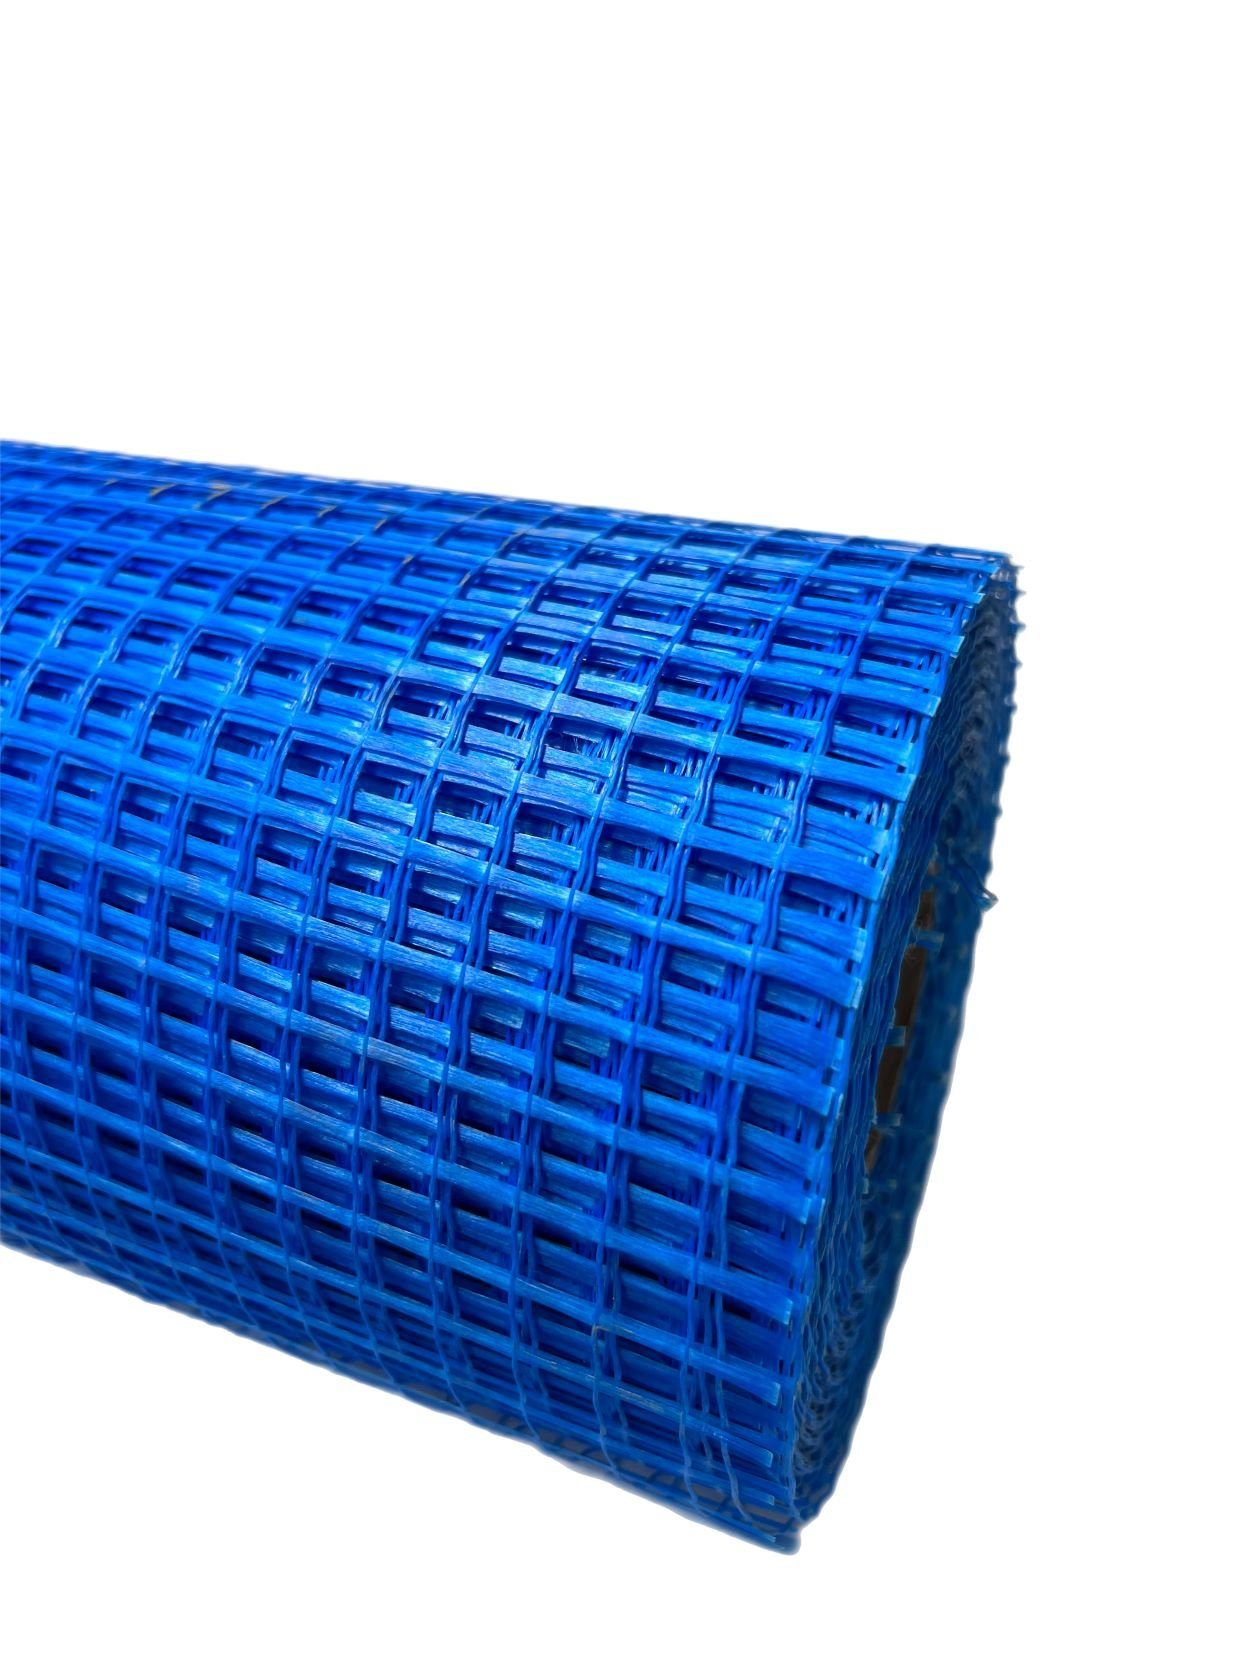 VaGo-Tools Blau Glaswolle 250m² 110g/m² Putzgewebe Armierungsgewebe